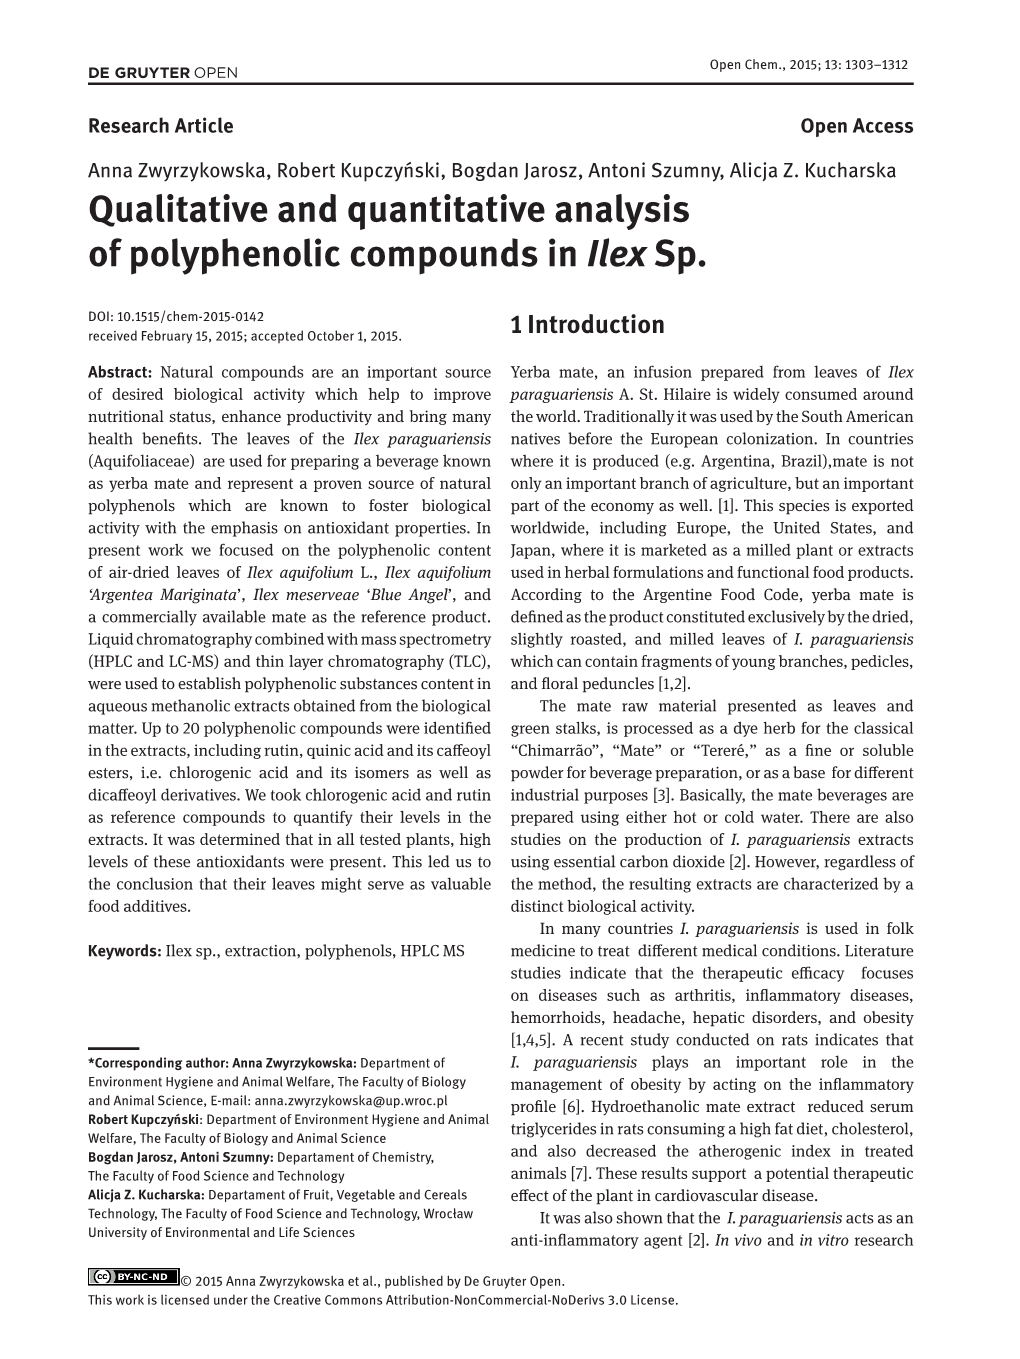 Qualitative and Quantitative Analysis of Polyphenolic Compounds in Ilex Sp